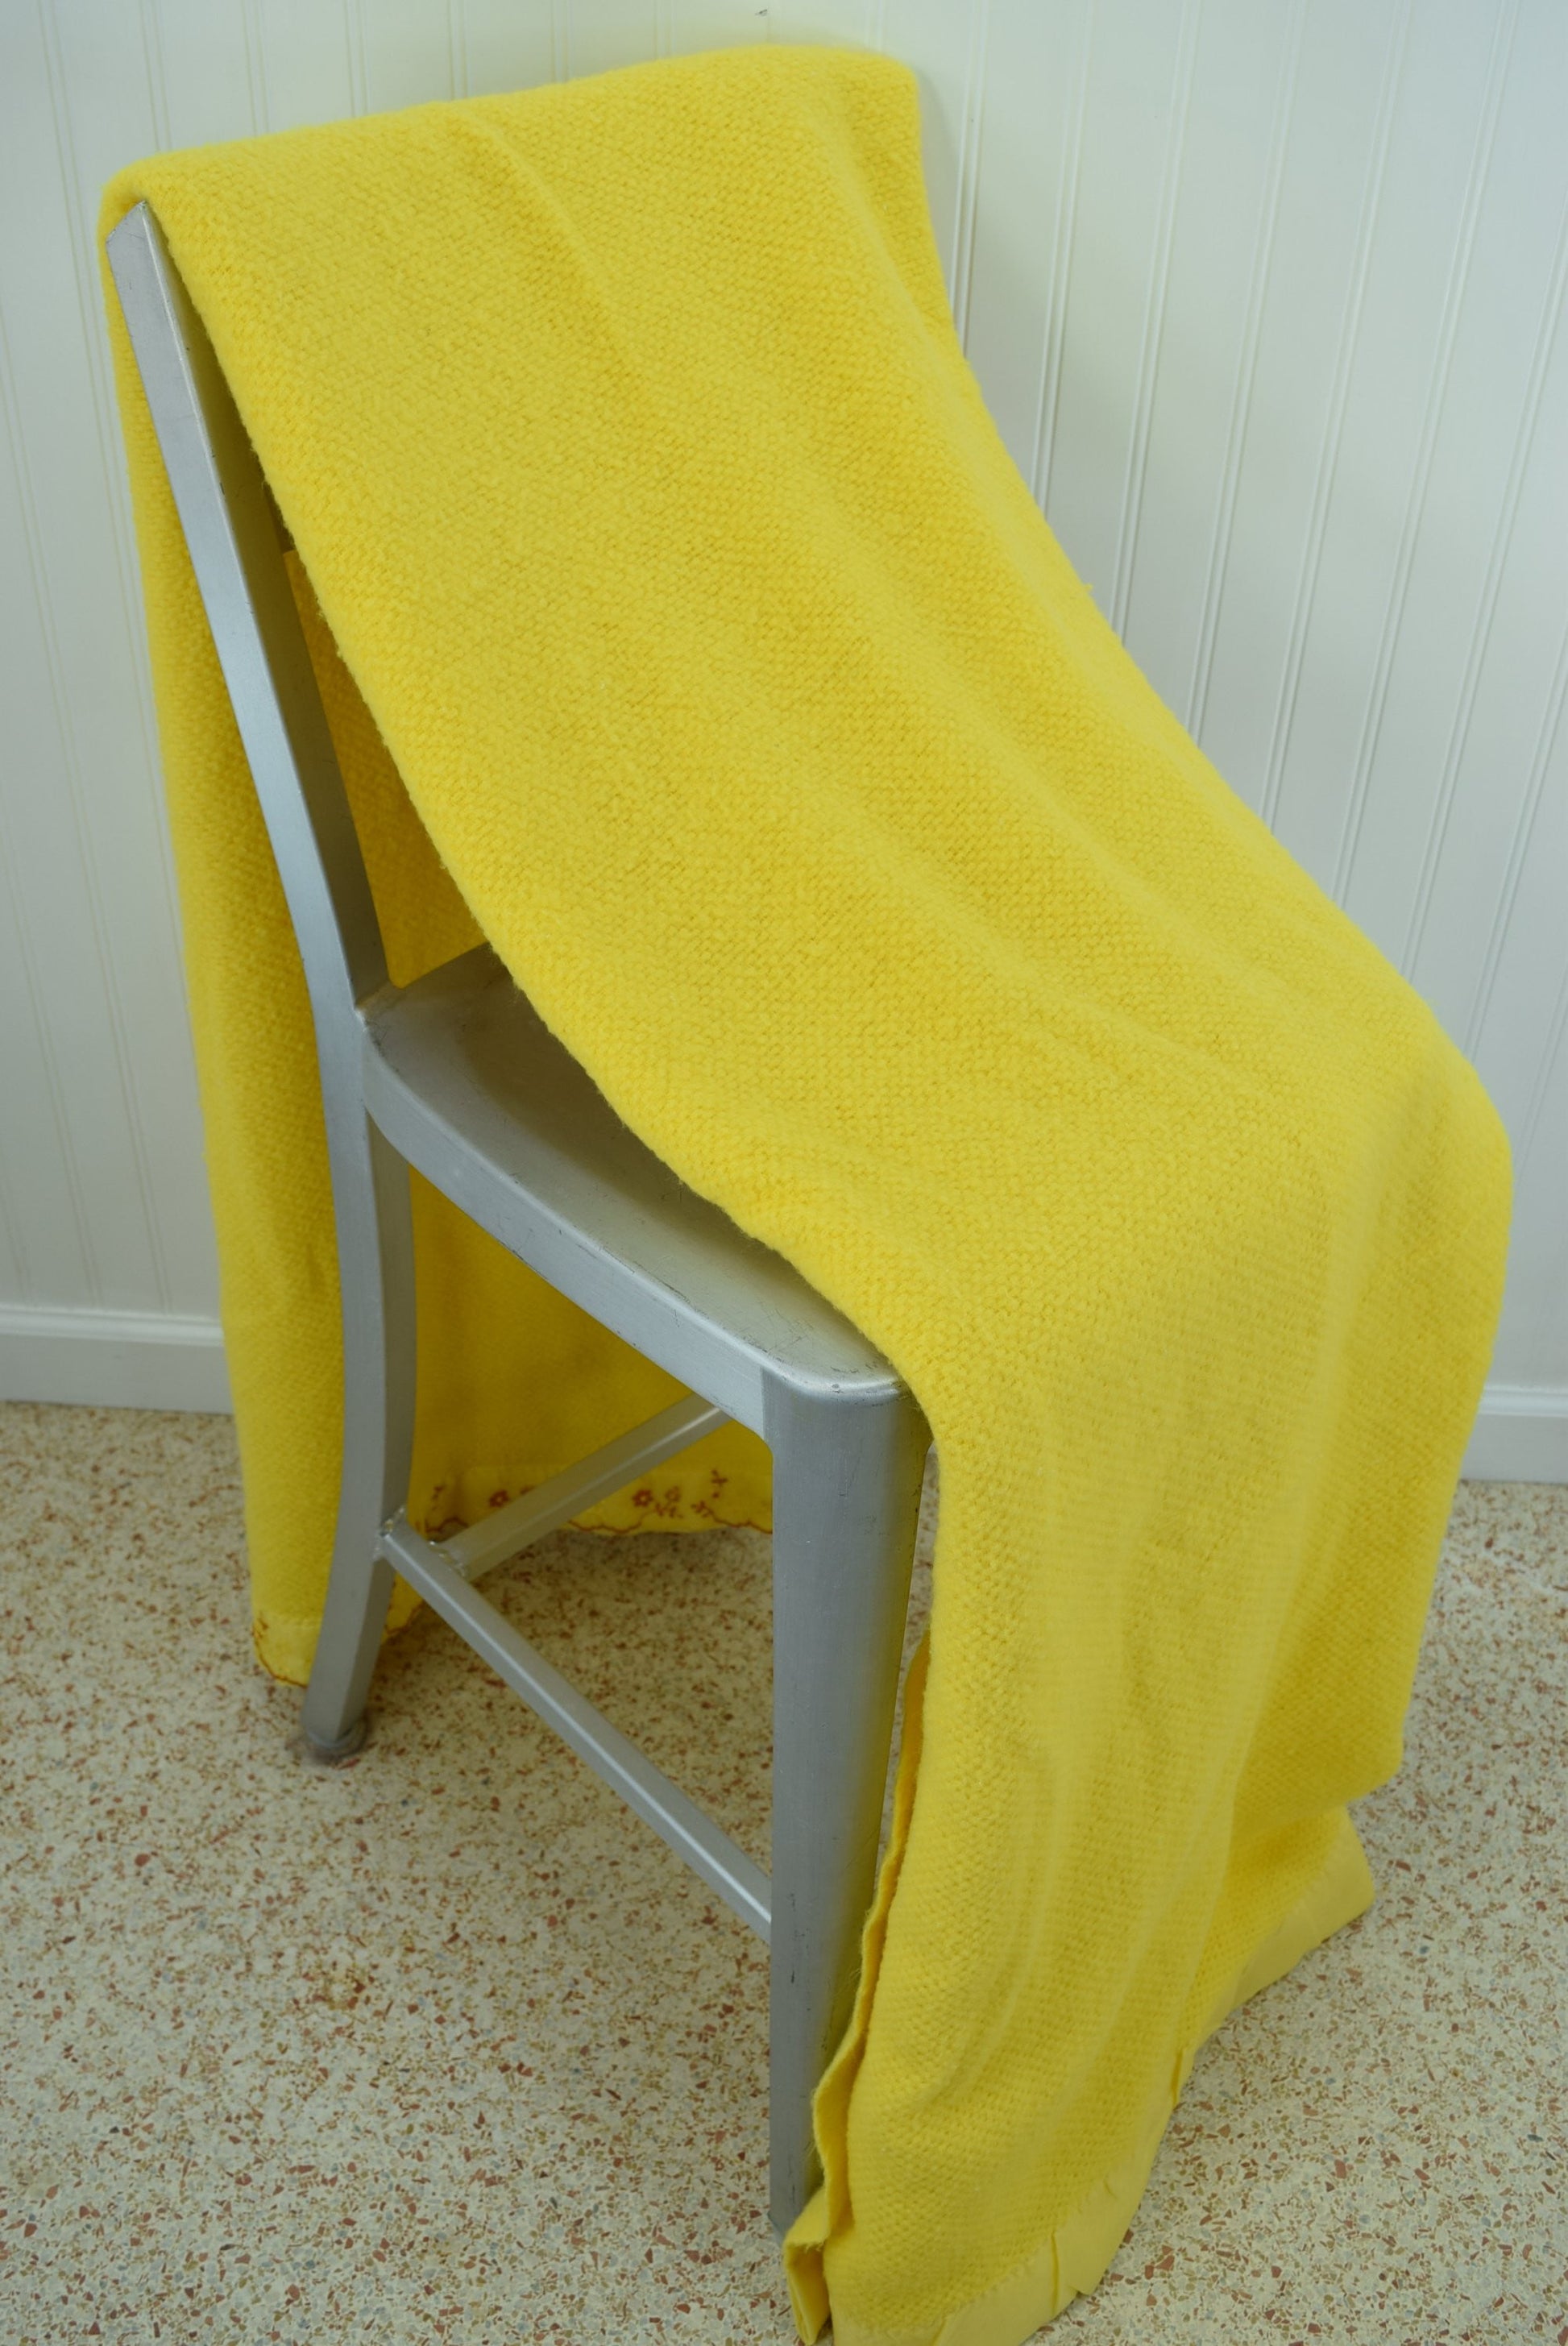 Acrylic Thermal Blanket for sale Lemon Yellow with Embroidered Binding Retro Bedding sunshine